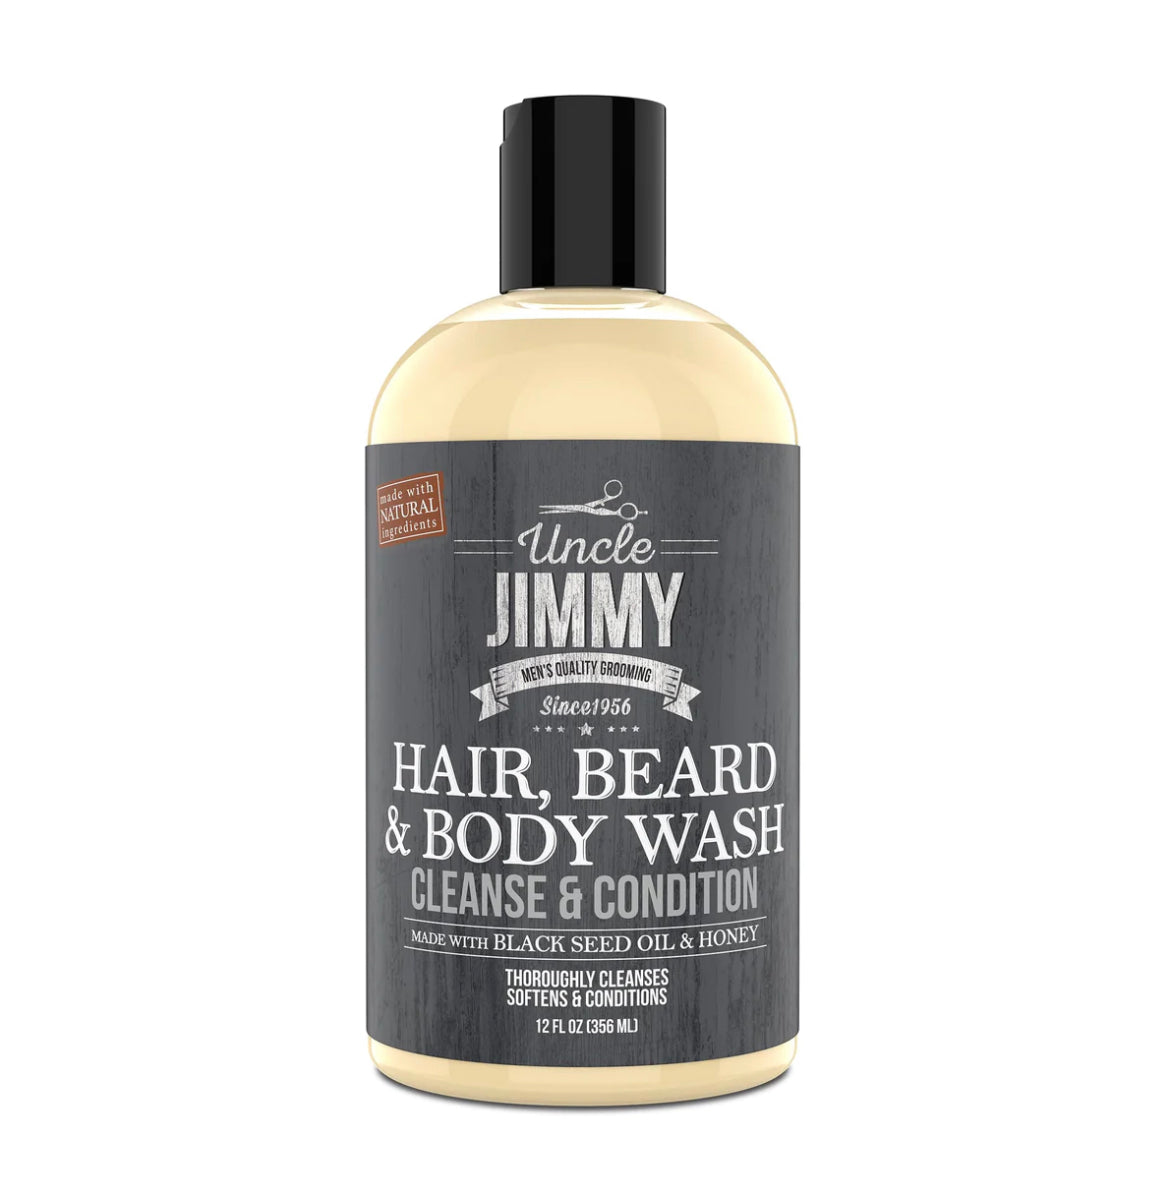 UNCLE JIMMY HAIR, BEARD & BODY WASH